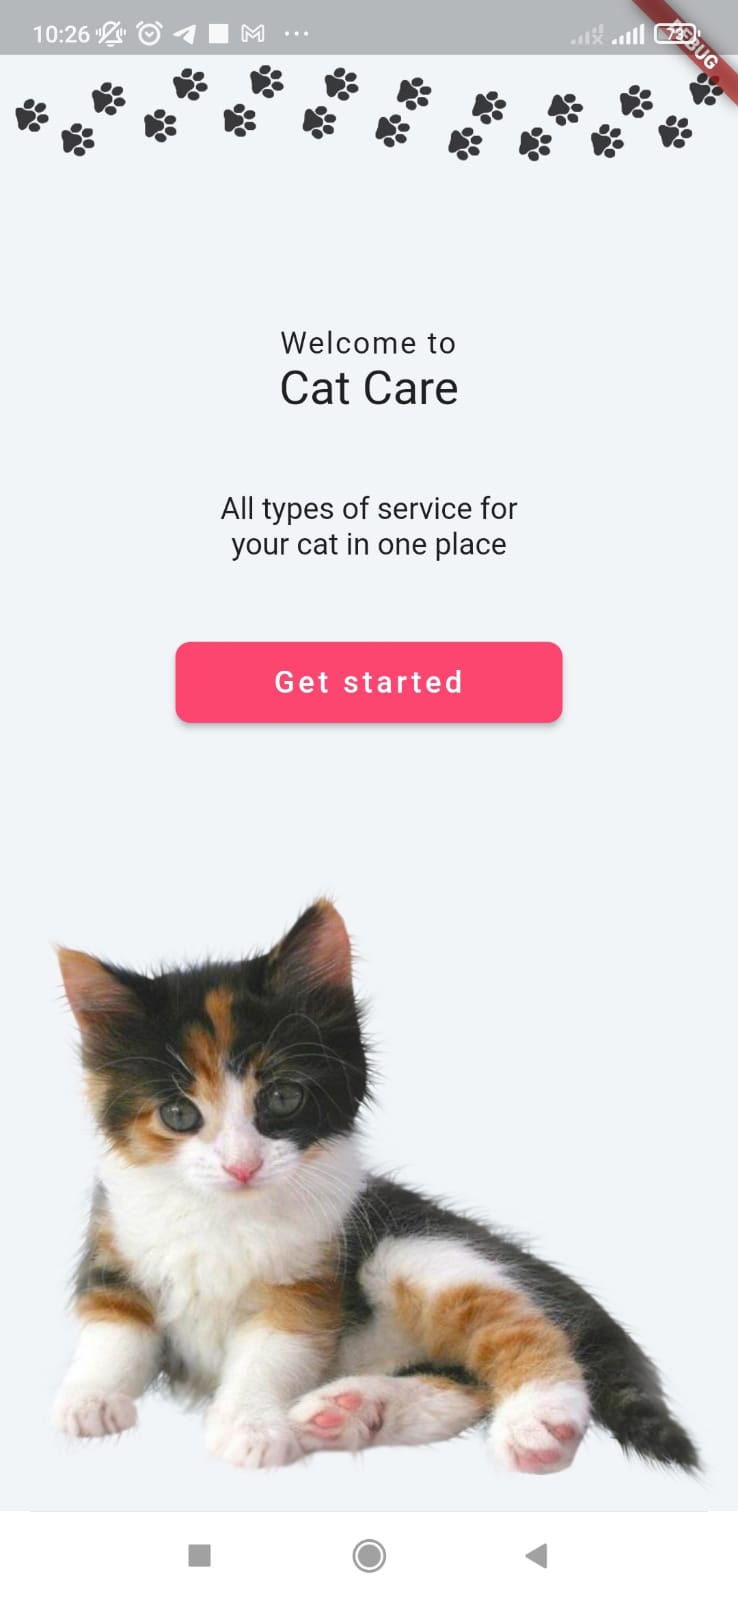 Random Cat Facts App built with Flutter